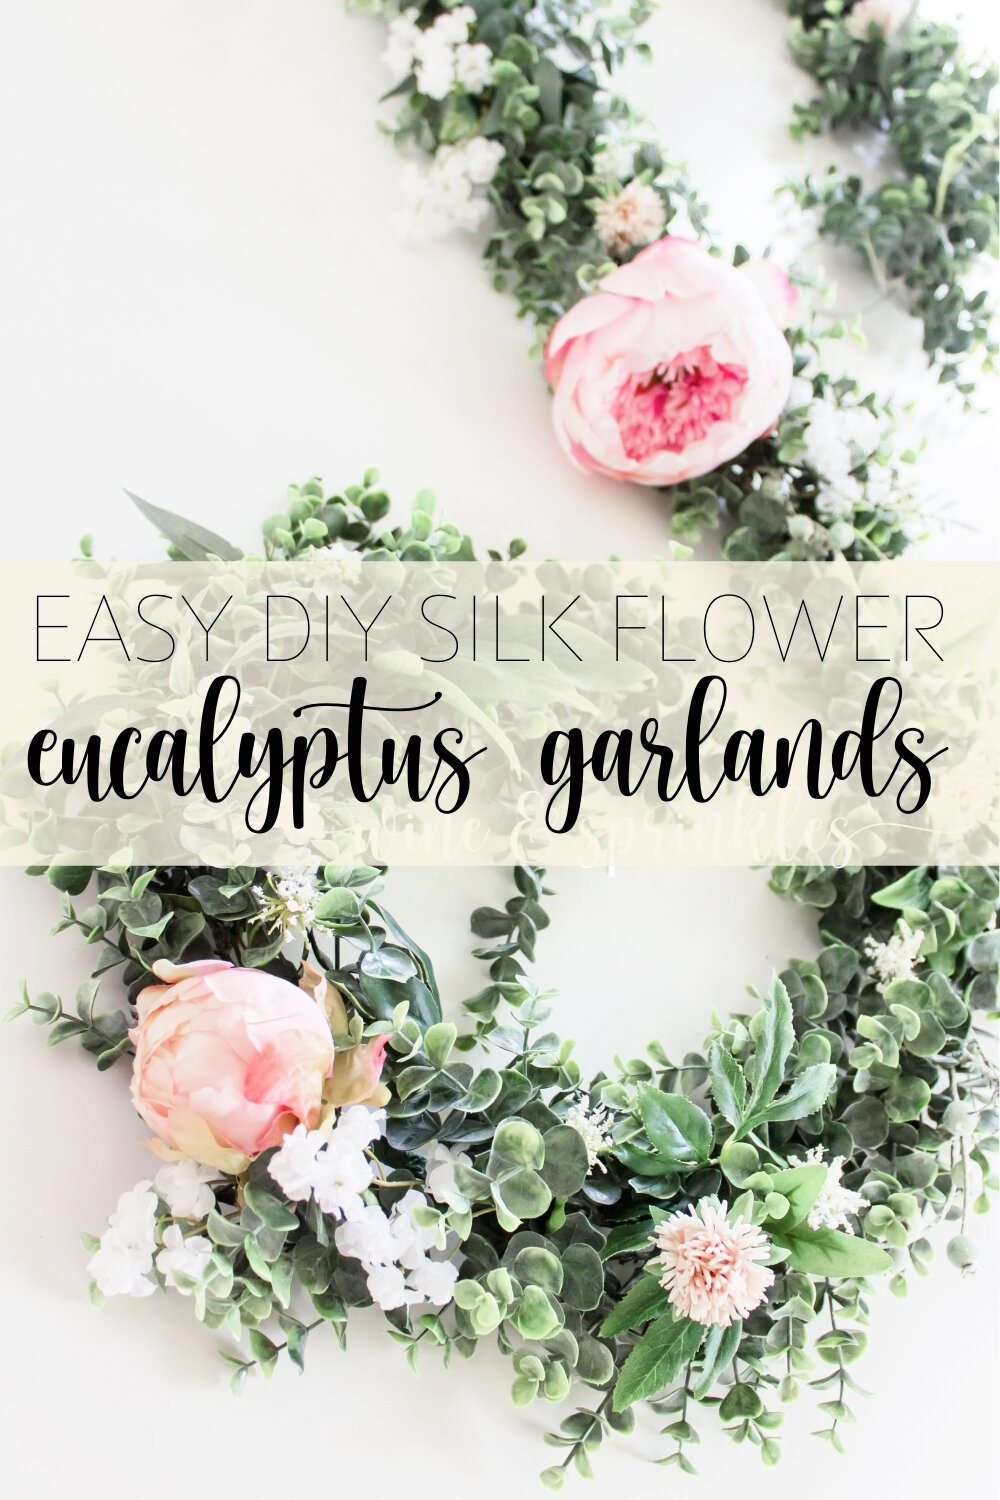 DIY Silk Flower Eucalyptus Garlands